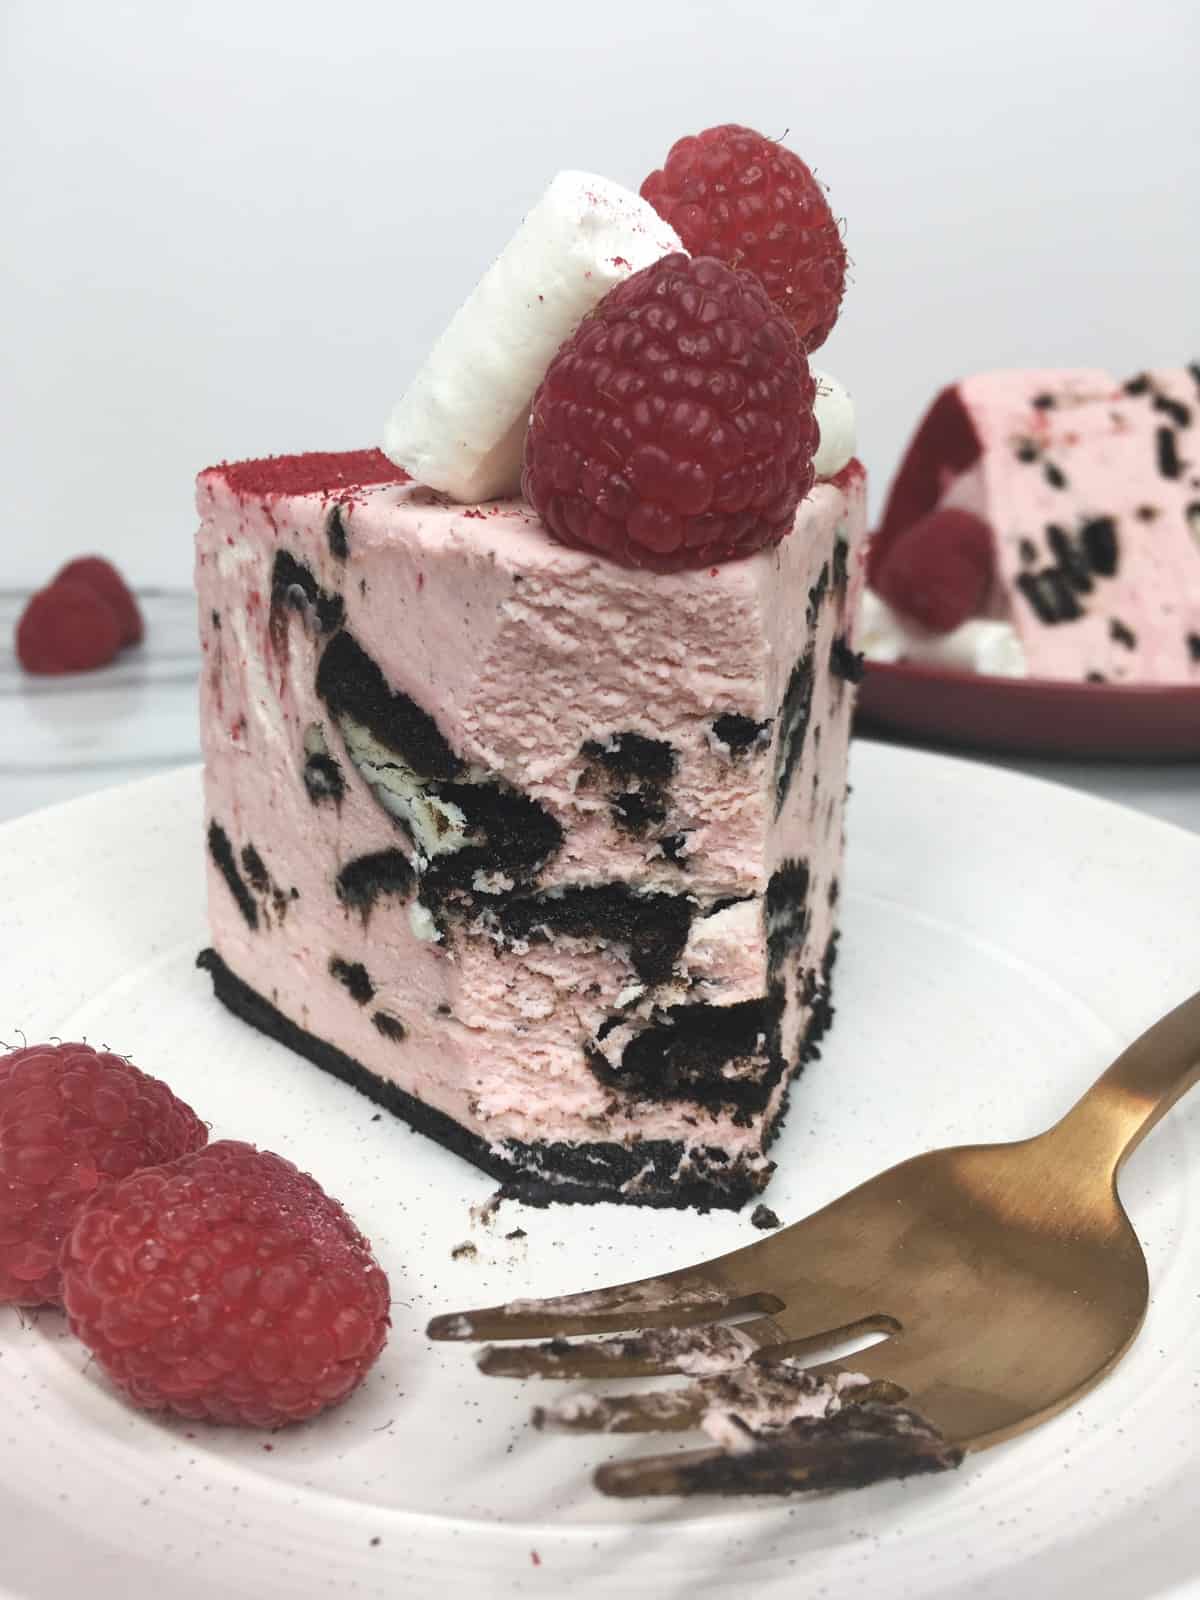 A single slice of no-bake Oreo cheesecake, fork, and raspberries on a white plate